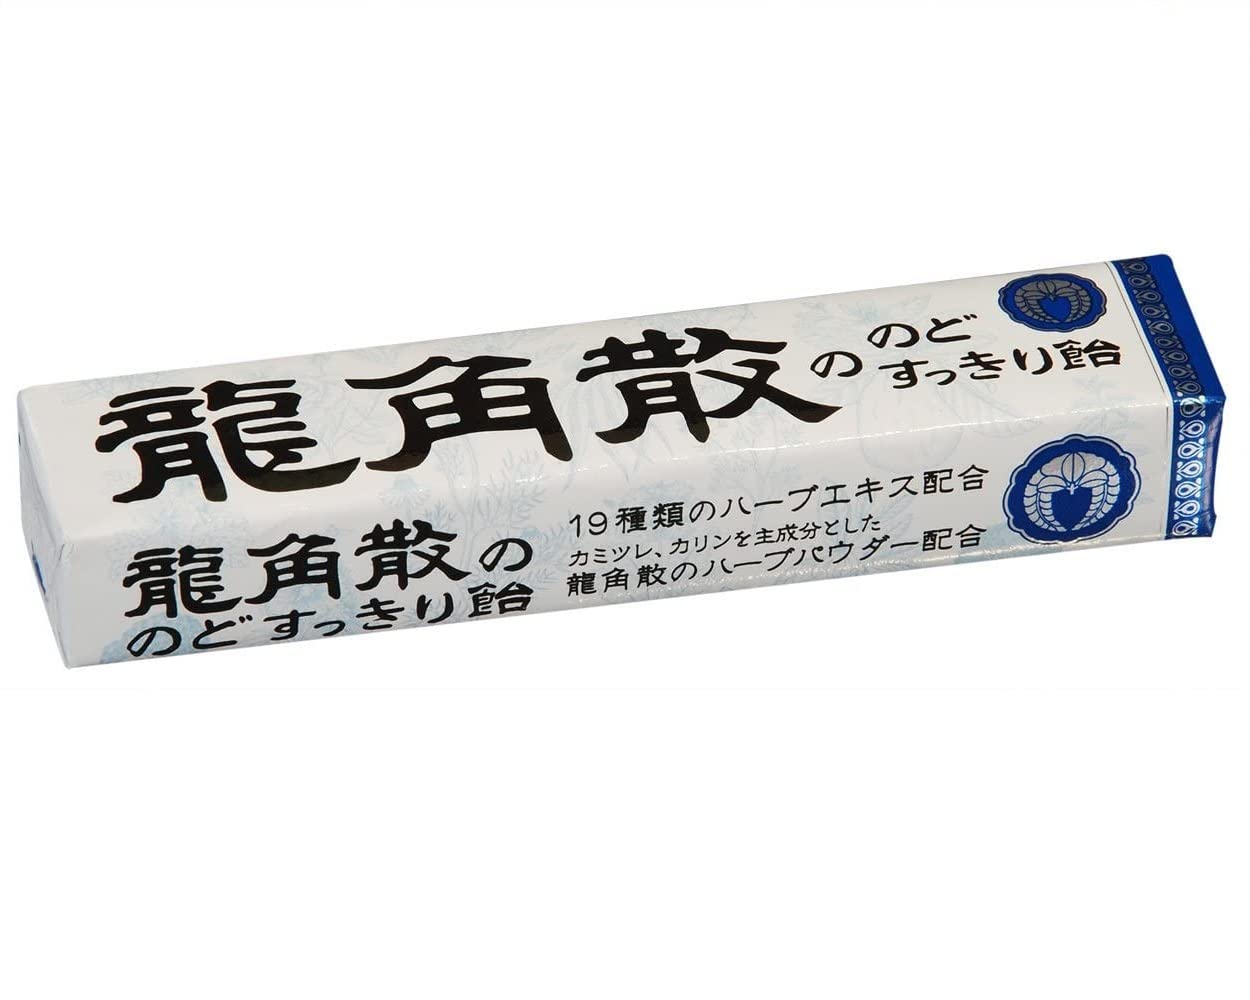 Ryukakusan Mint Flavor Herbal Drops